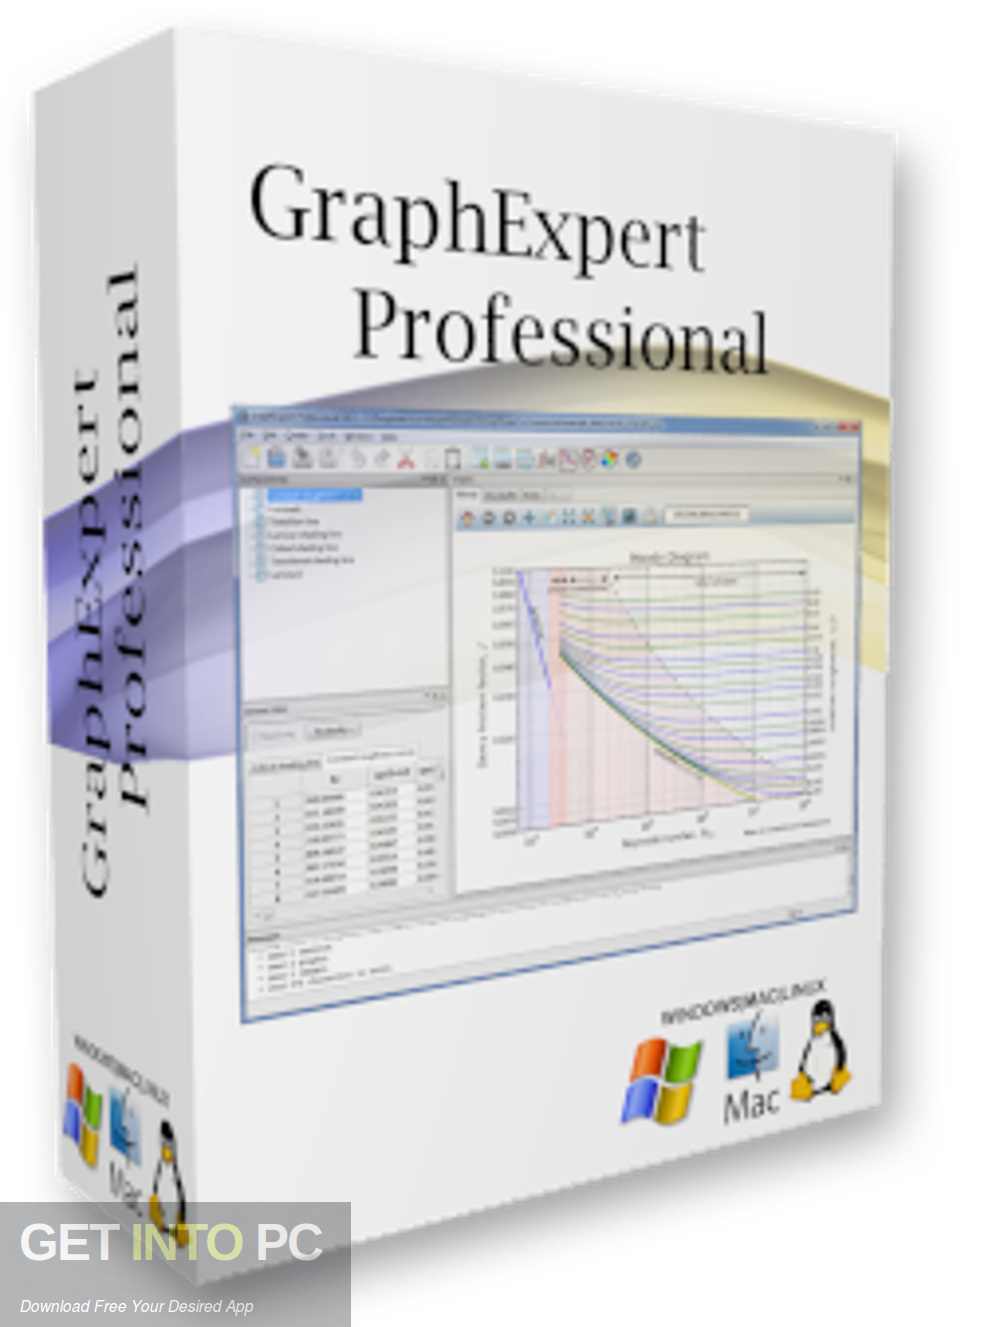 GraphExpert Professional Free Download-GetintoPC.com